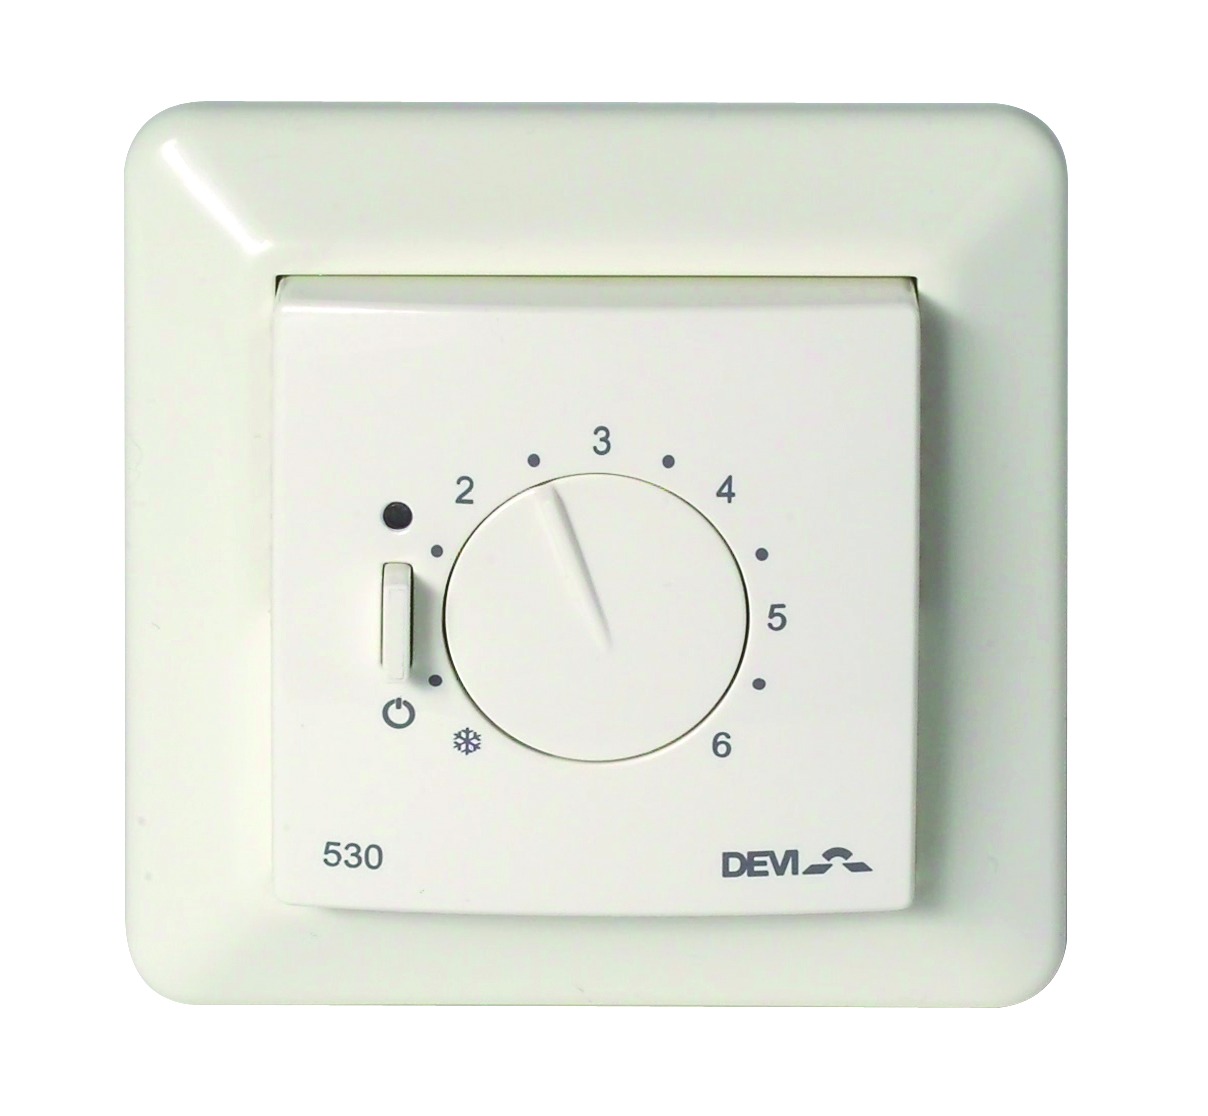 termostat Devireg 530